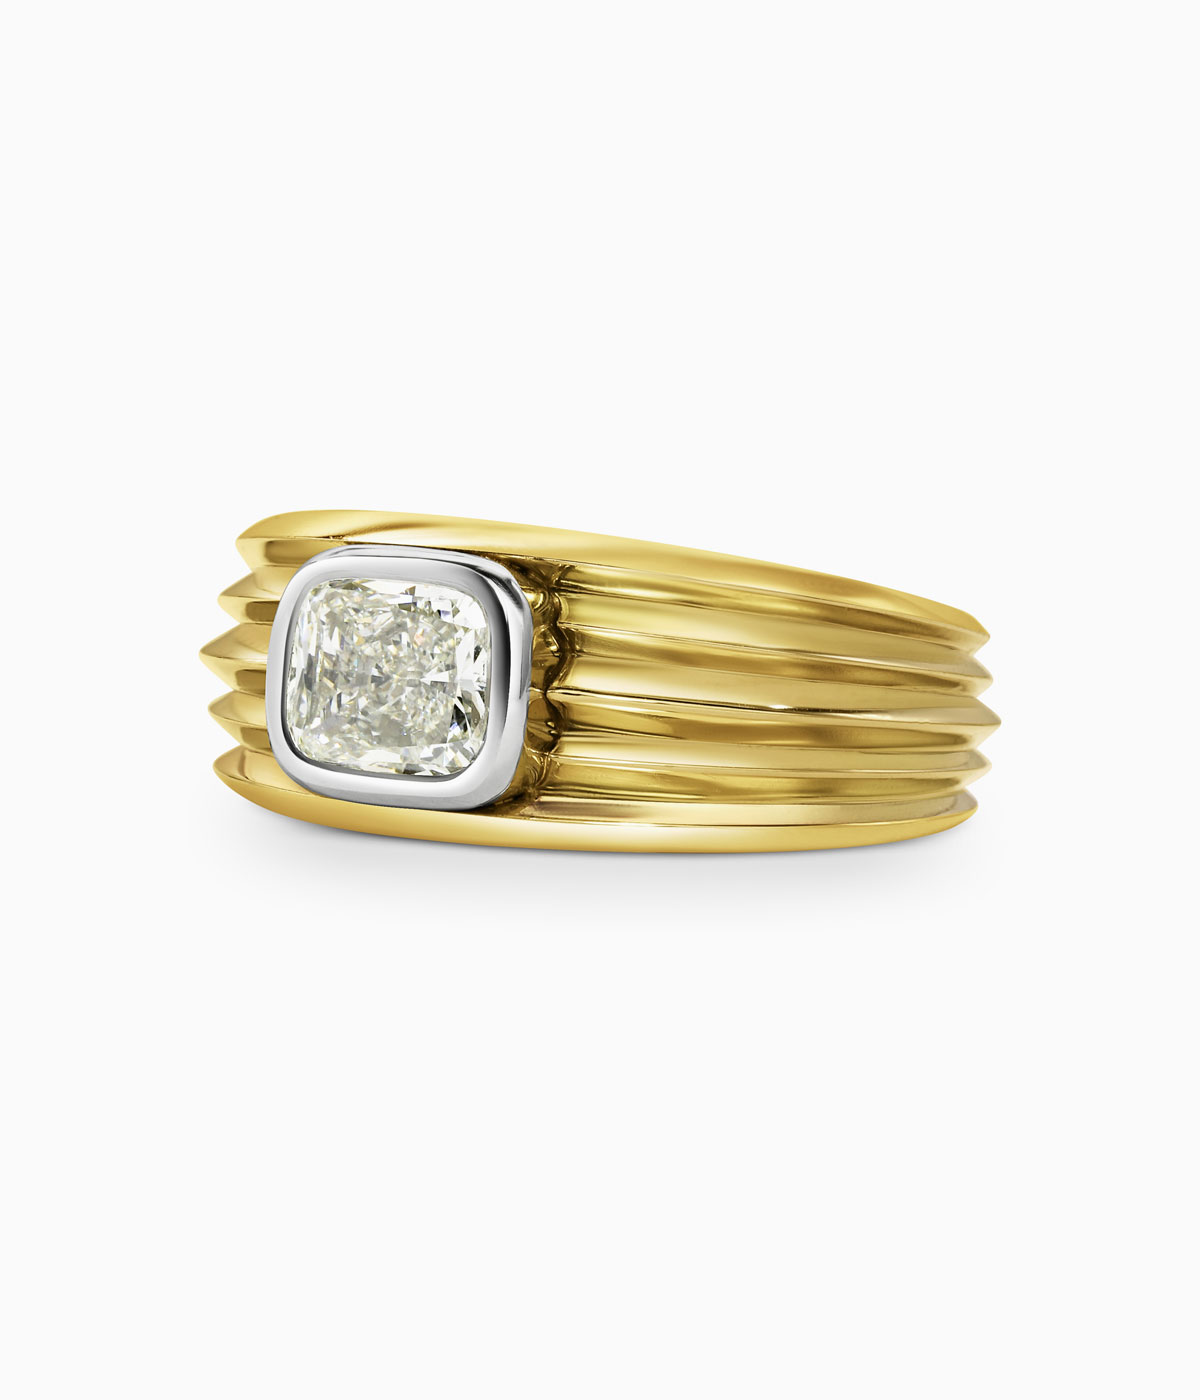 Rachel Boston gold ring